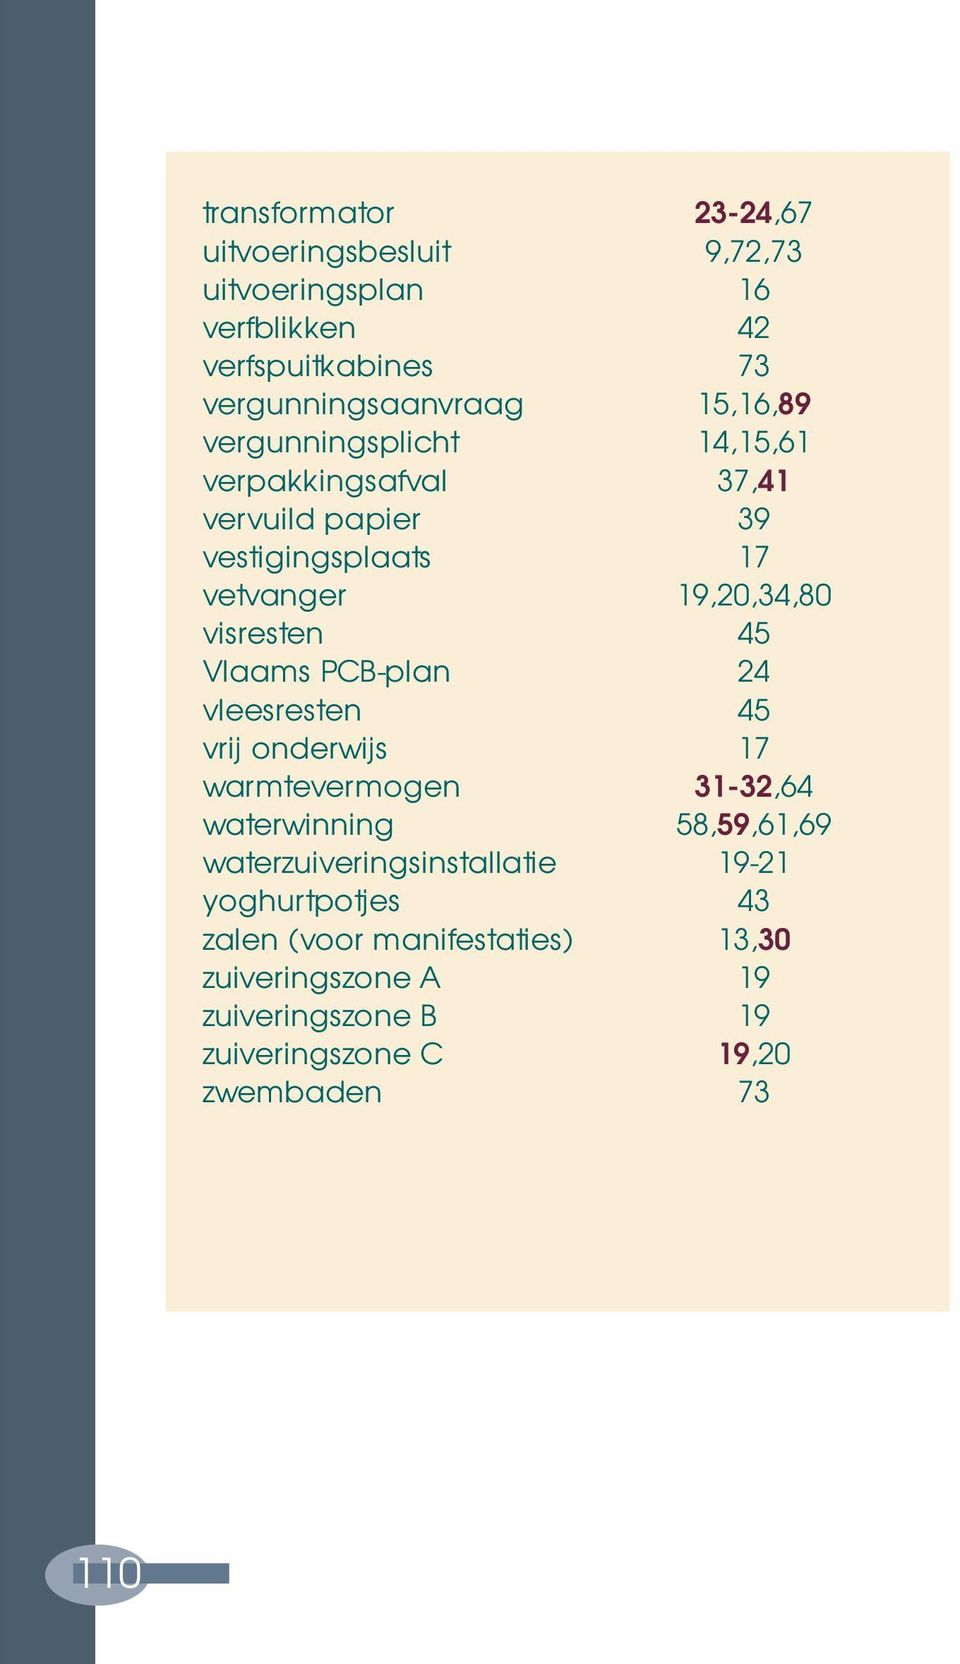 45 Vlaams PCB-plan 24 vleesresten 45 vrij onderwijs 17 warmtevermogen 31-32,64 waterwinning 58,59,61,69